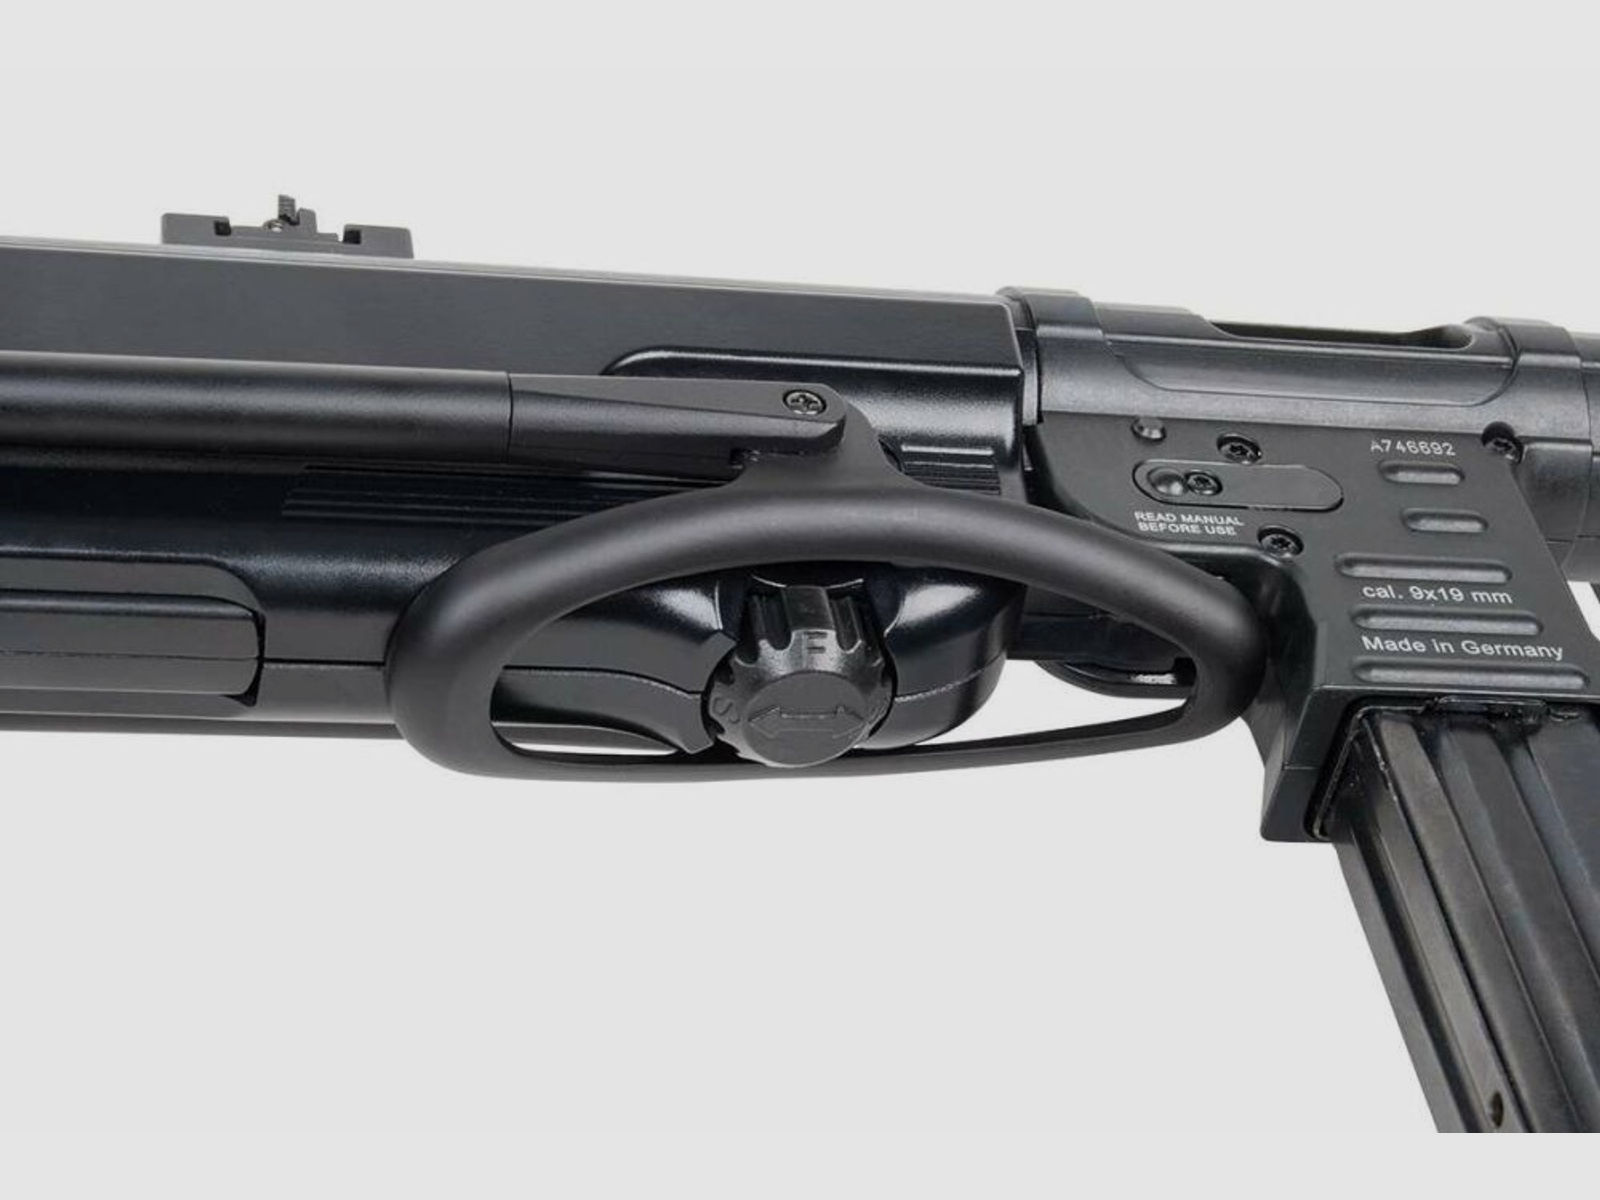 GSG MP40 Maschinenpistole	 9mmLuger